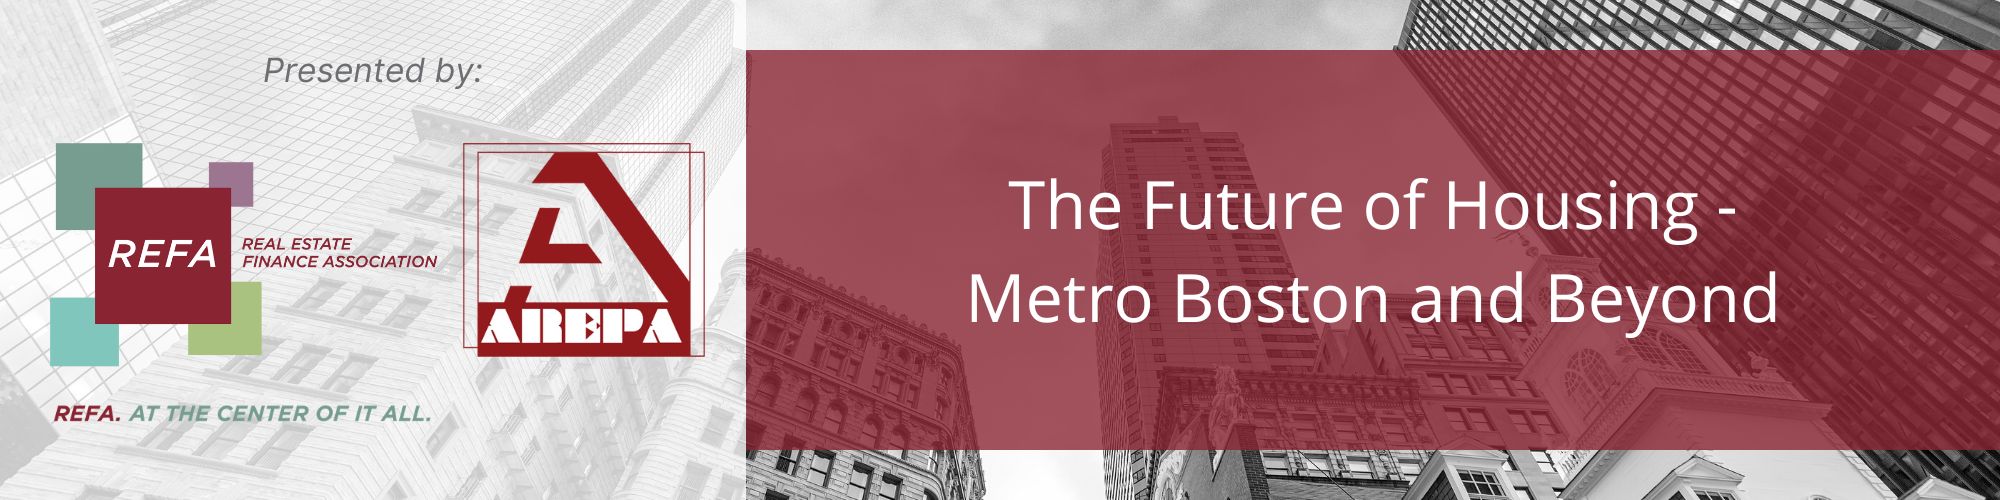 The Future of Housing - Metro Boston and Beyond